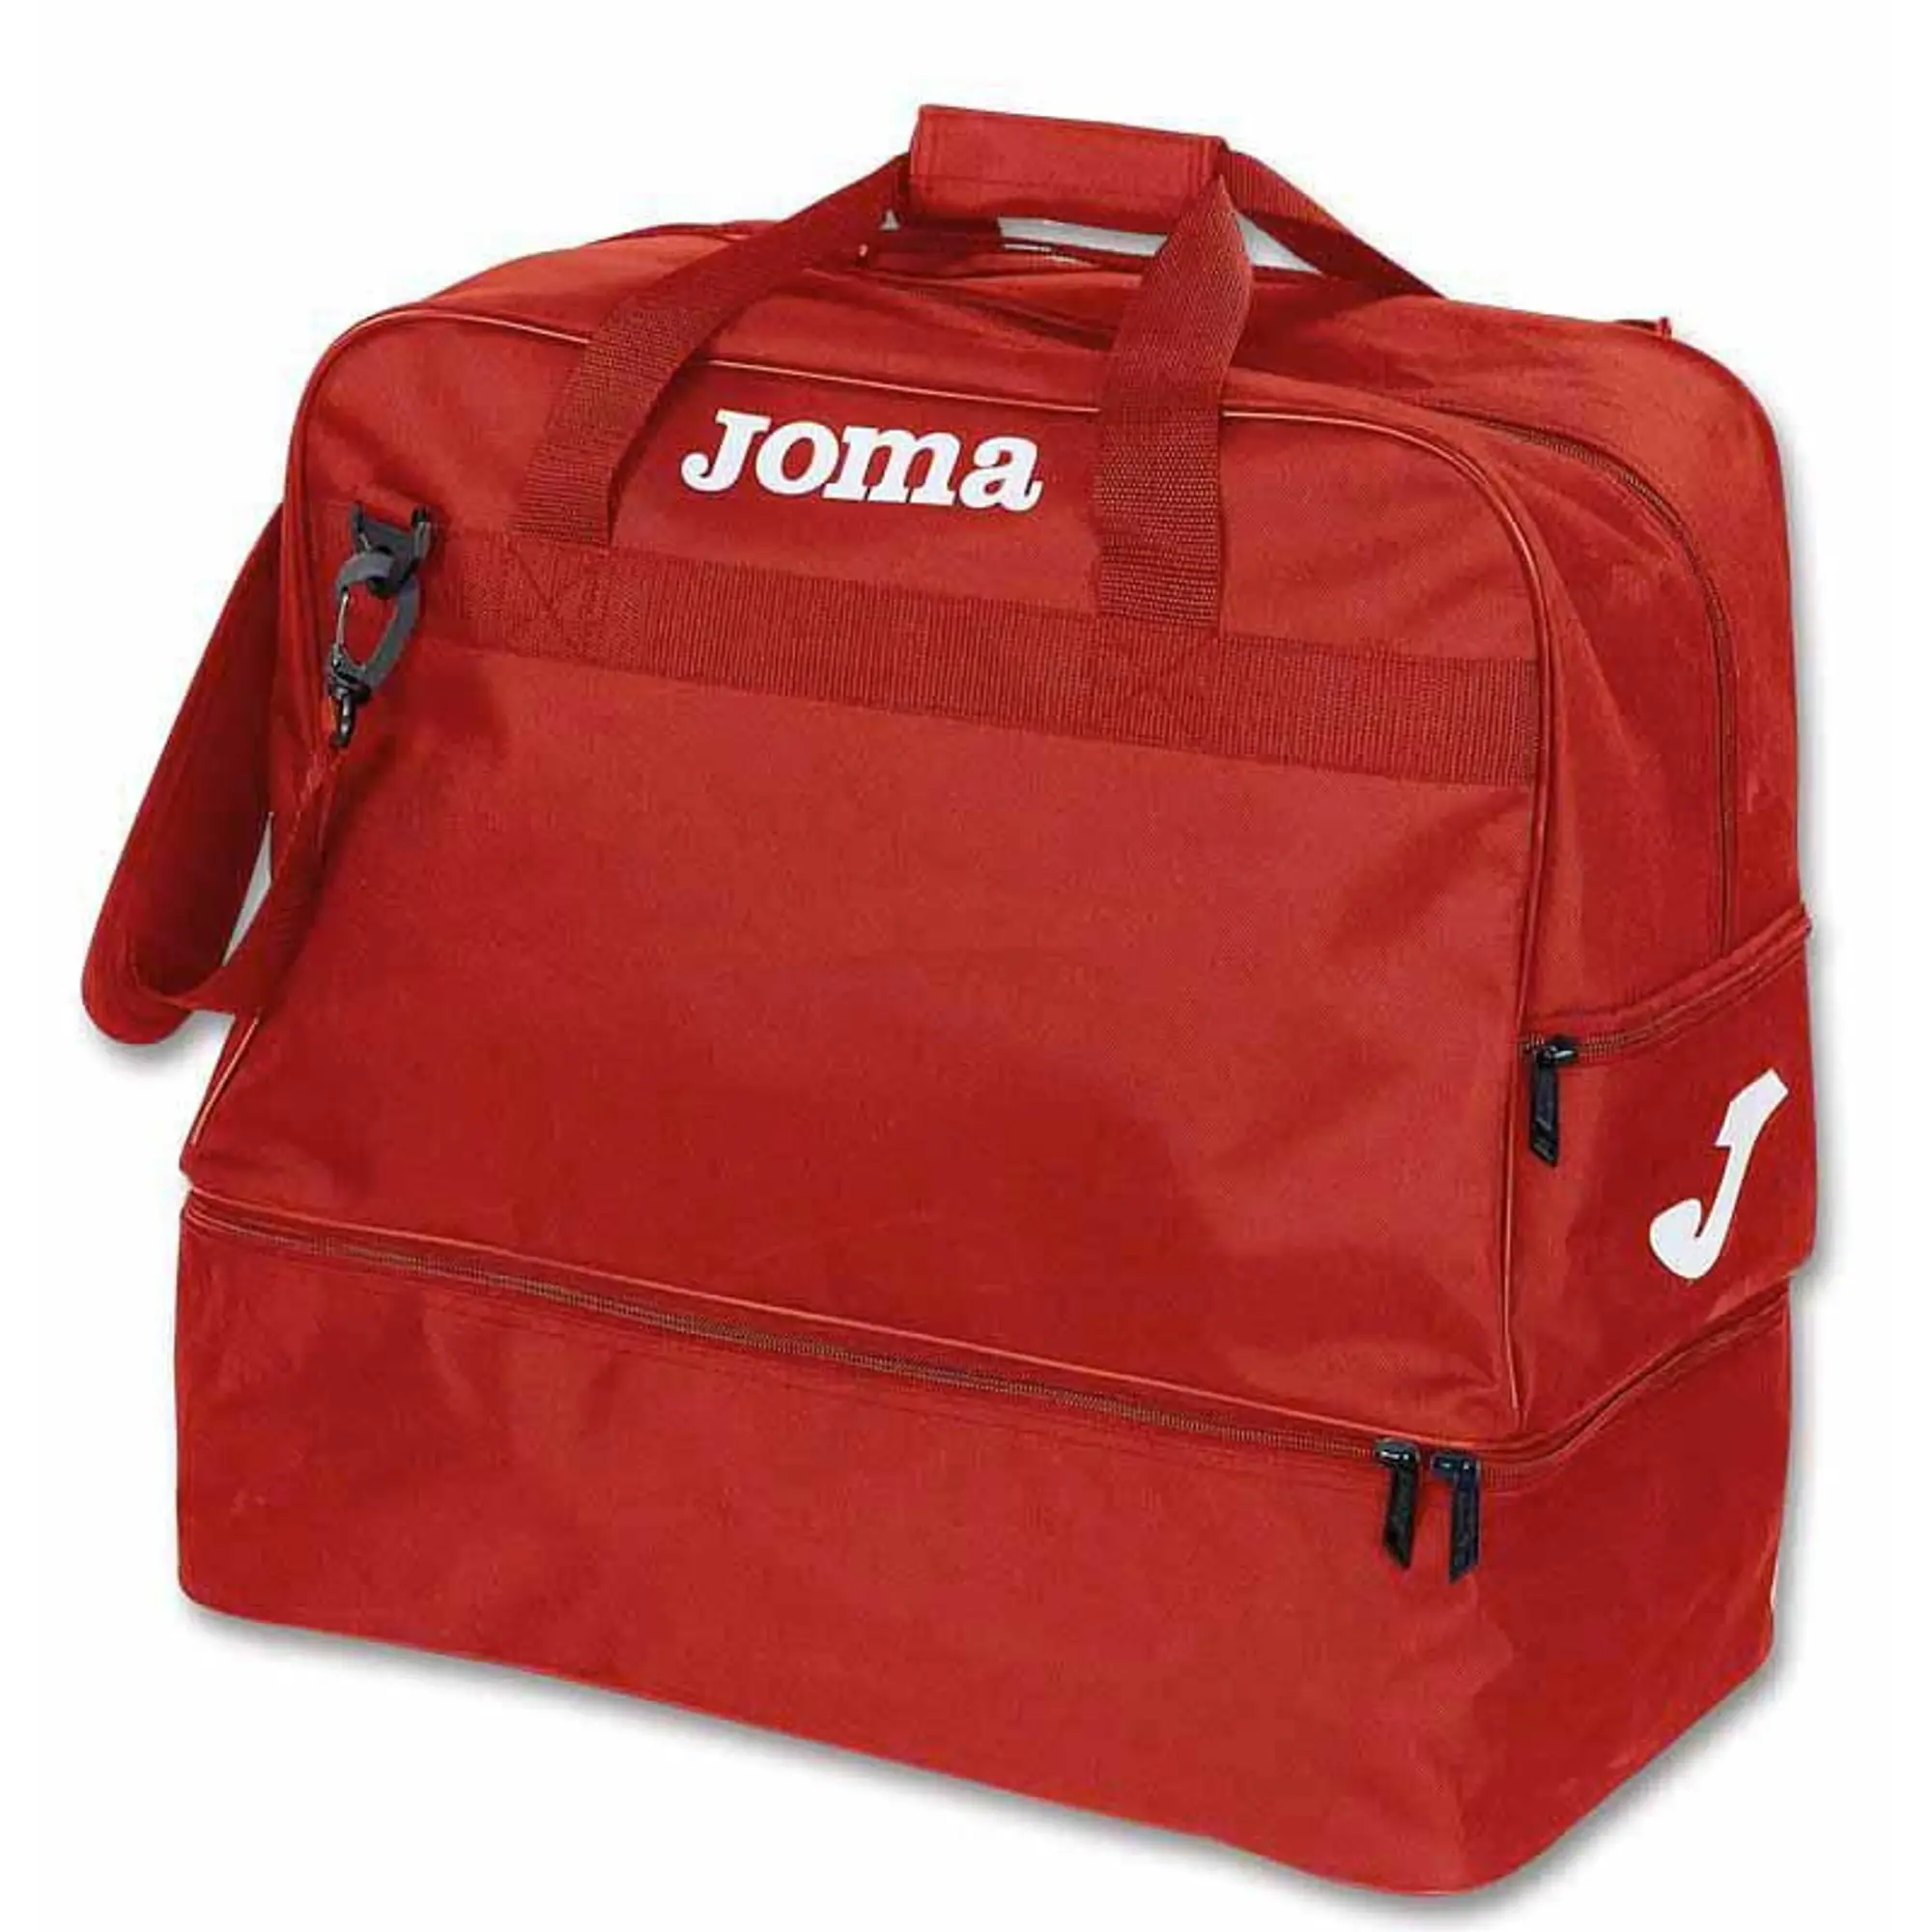 Joma Training Big Bag  - Red